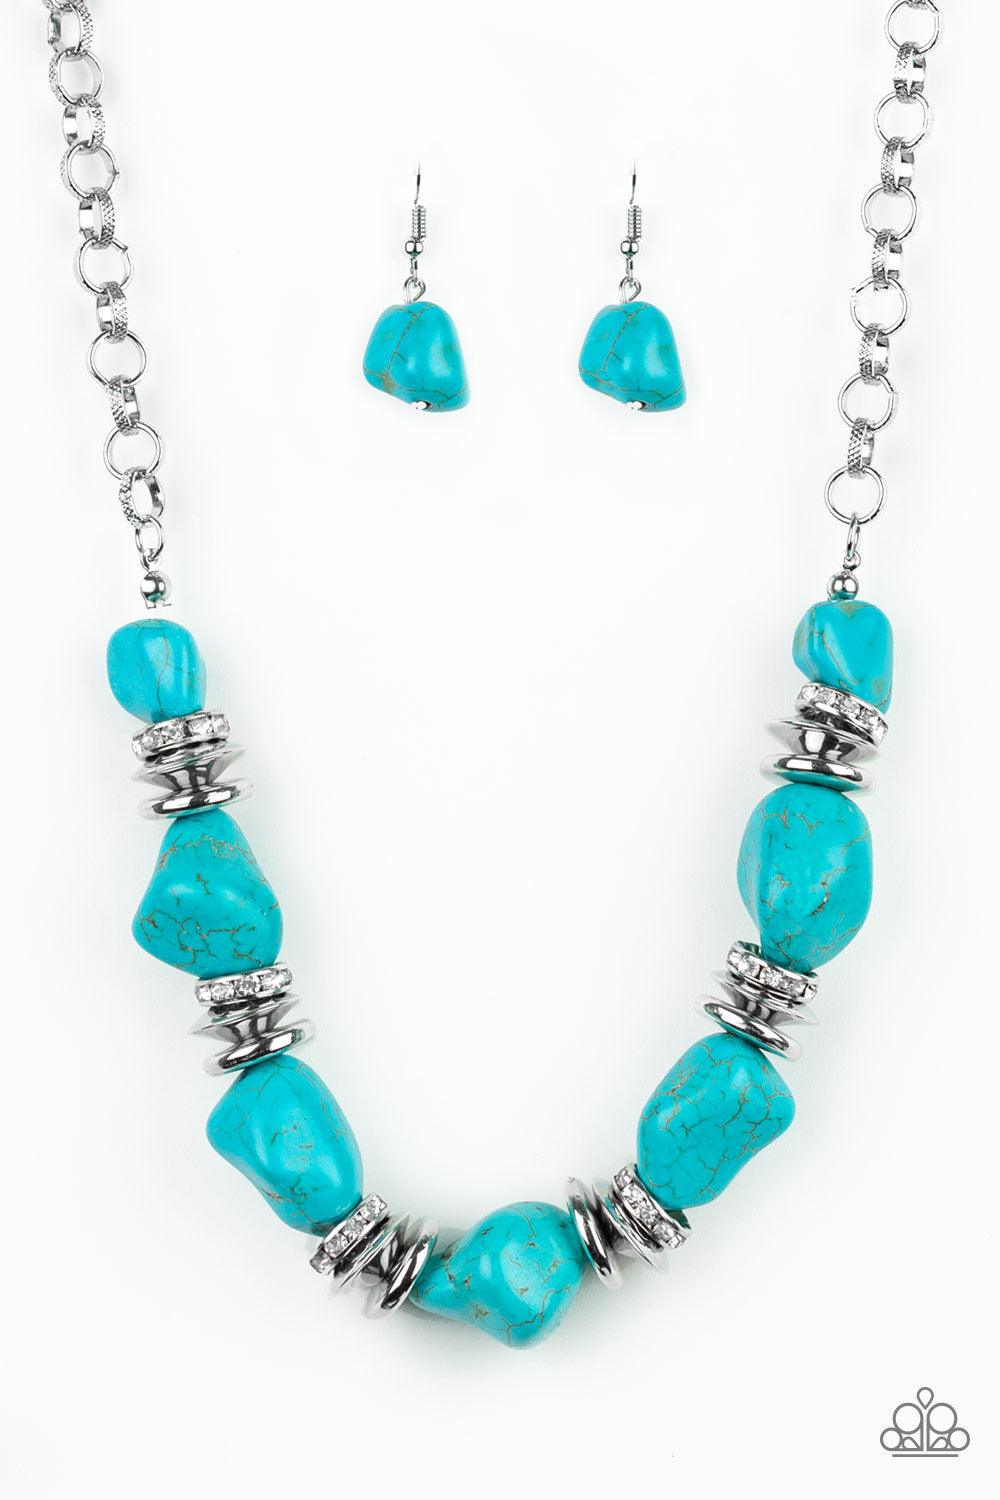 Stunningly Stone Age Blue Necklace